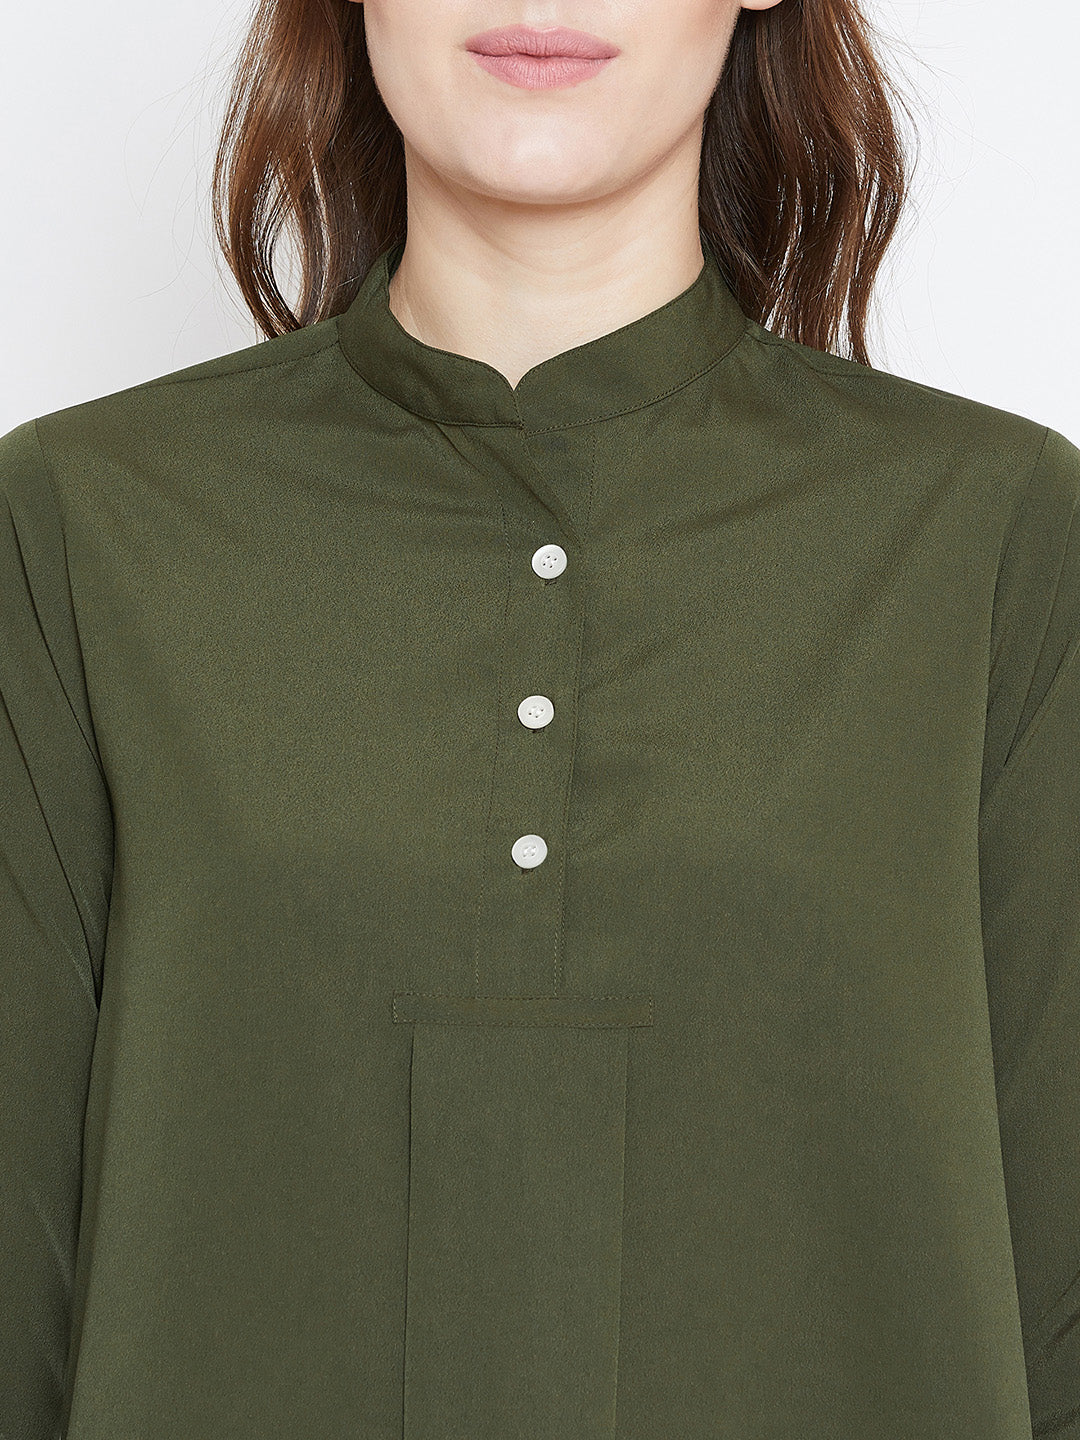 Berrylush Women Solid Olive Green Mandarin Collar High-Low Longline Top